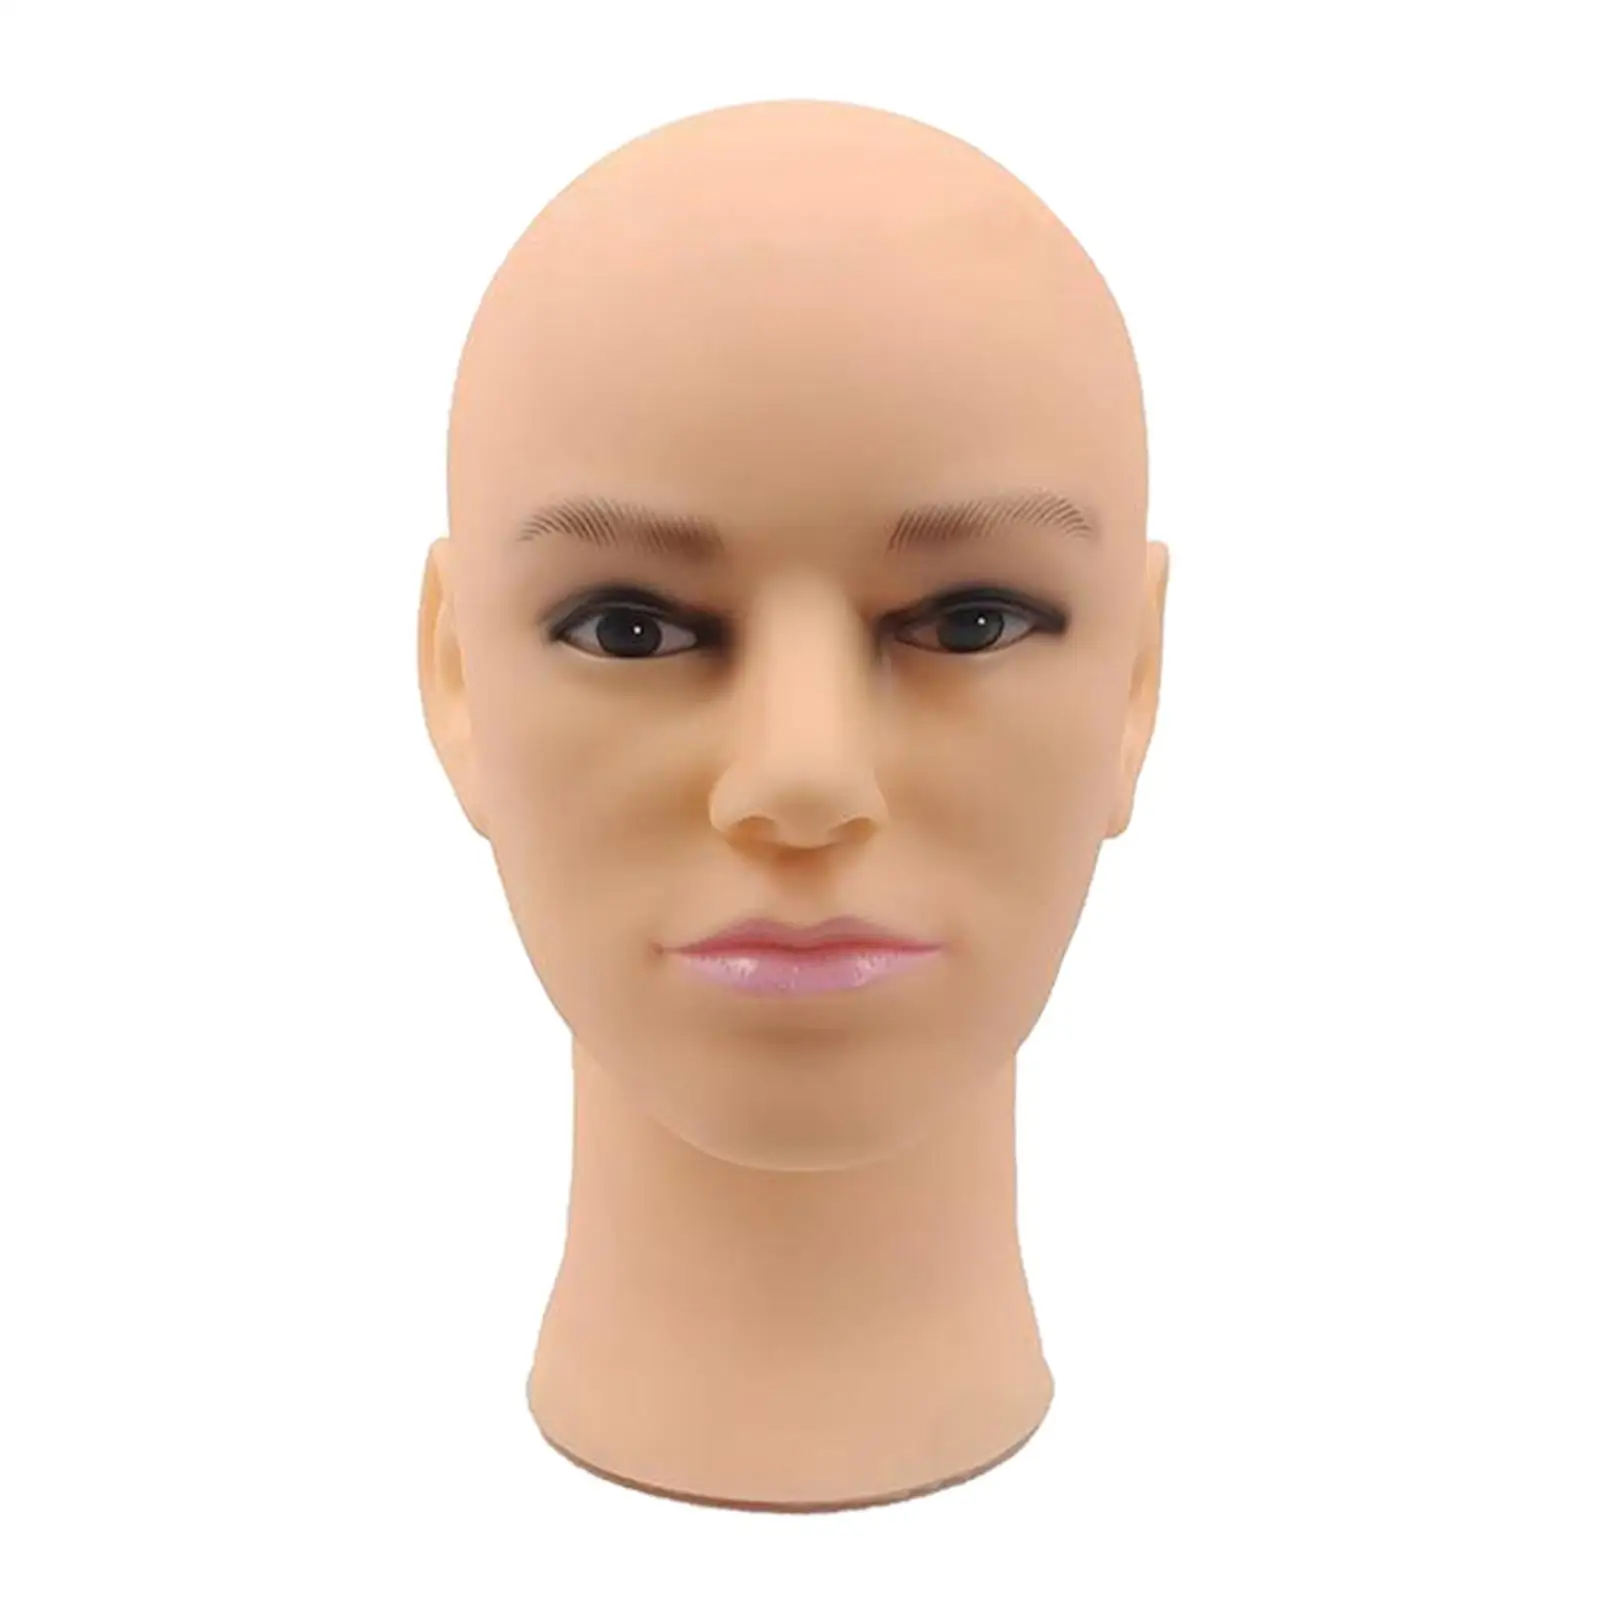 Bald Male  Head Cosmetology Manikin Model Doll Head for Making,Displays,eyeglasses  